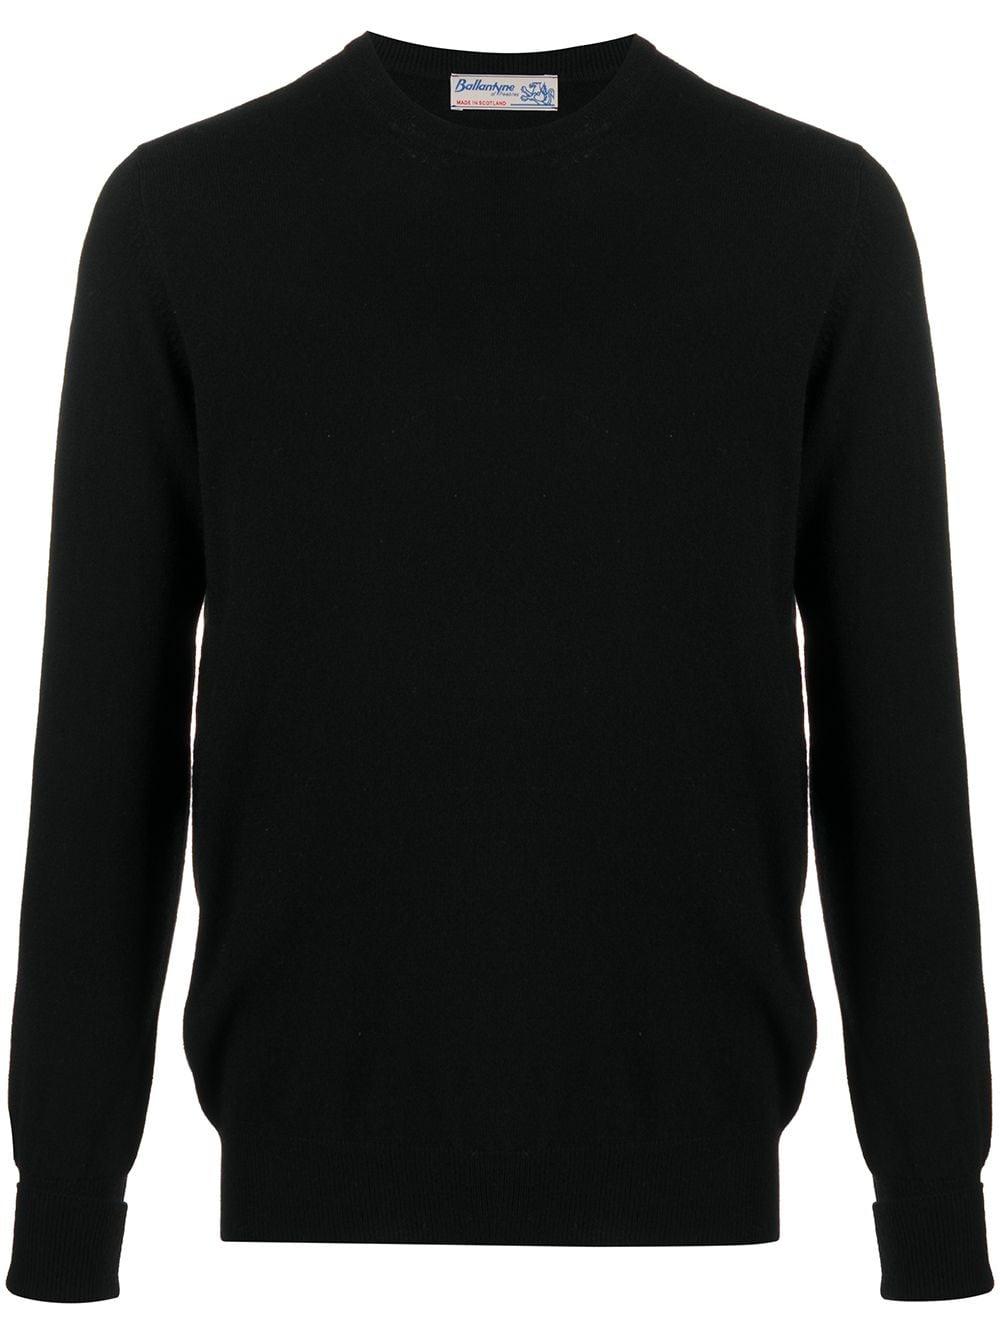 Ballantyne Cashmere Crew-neck Sweater in Black for Men - Lyst